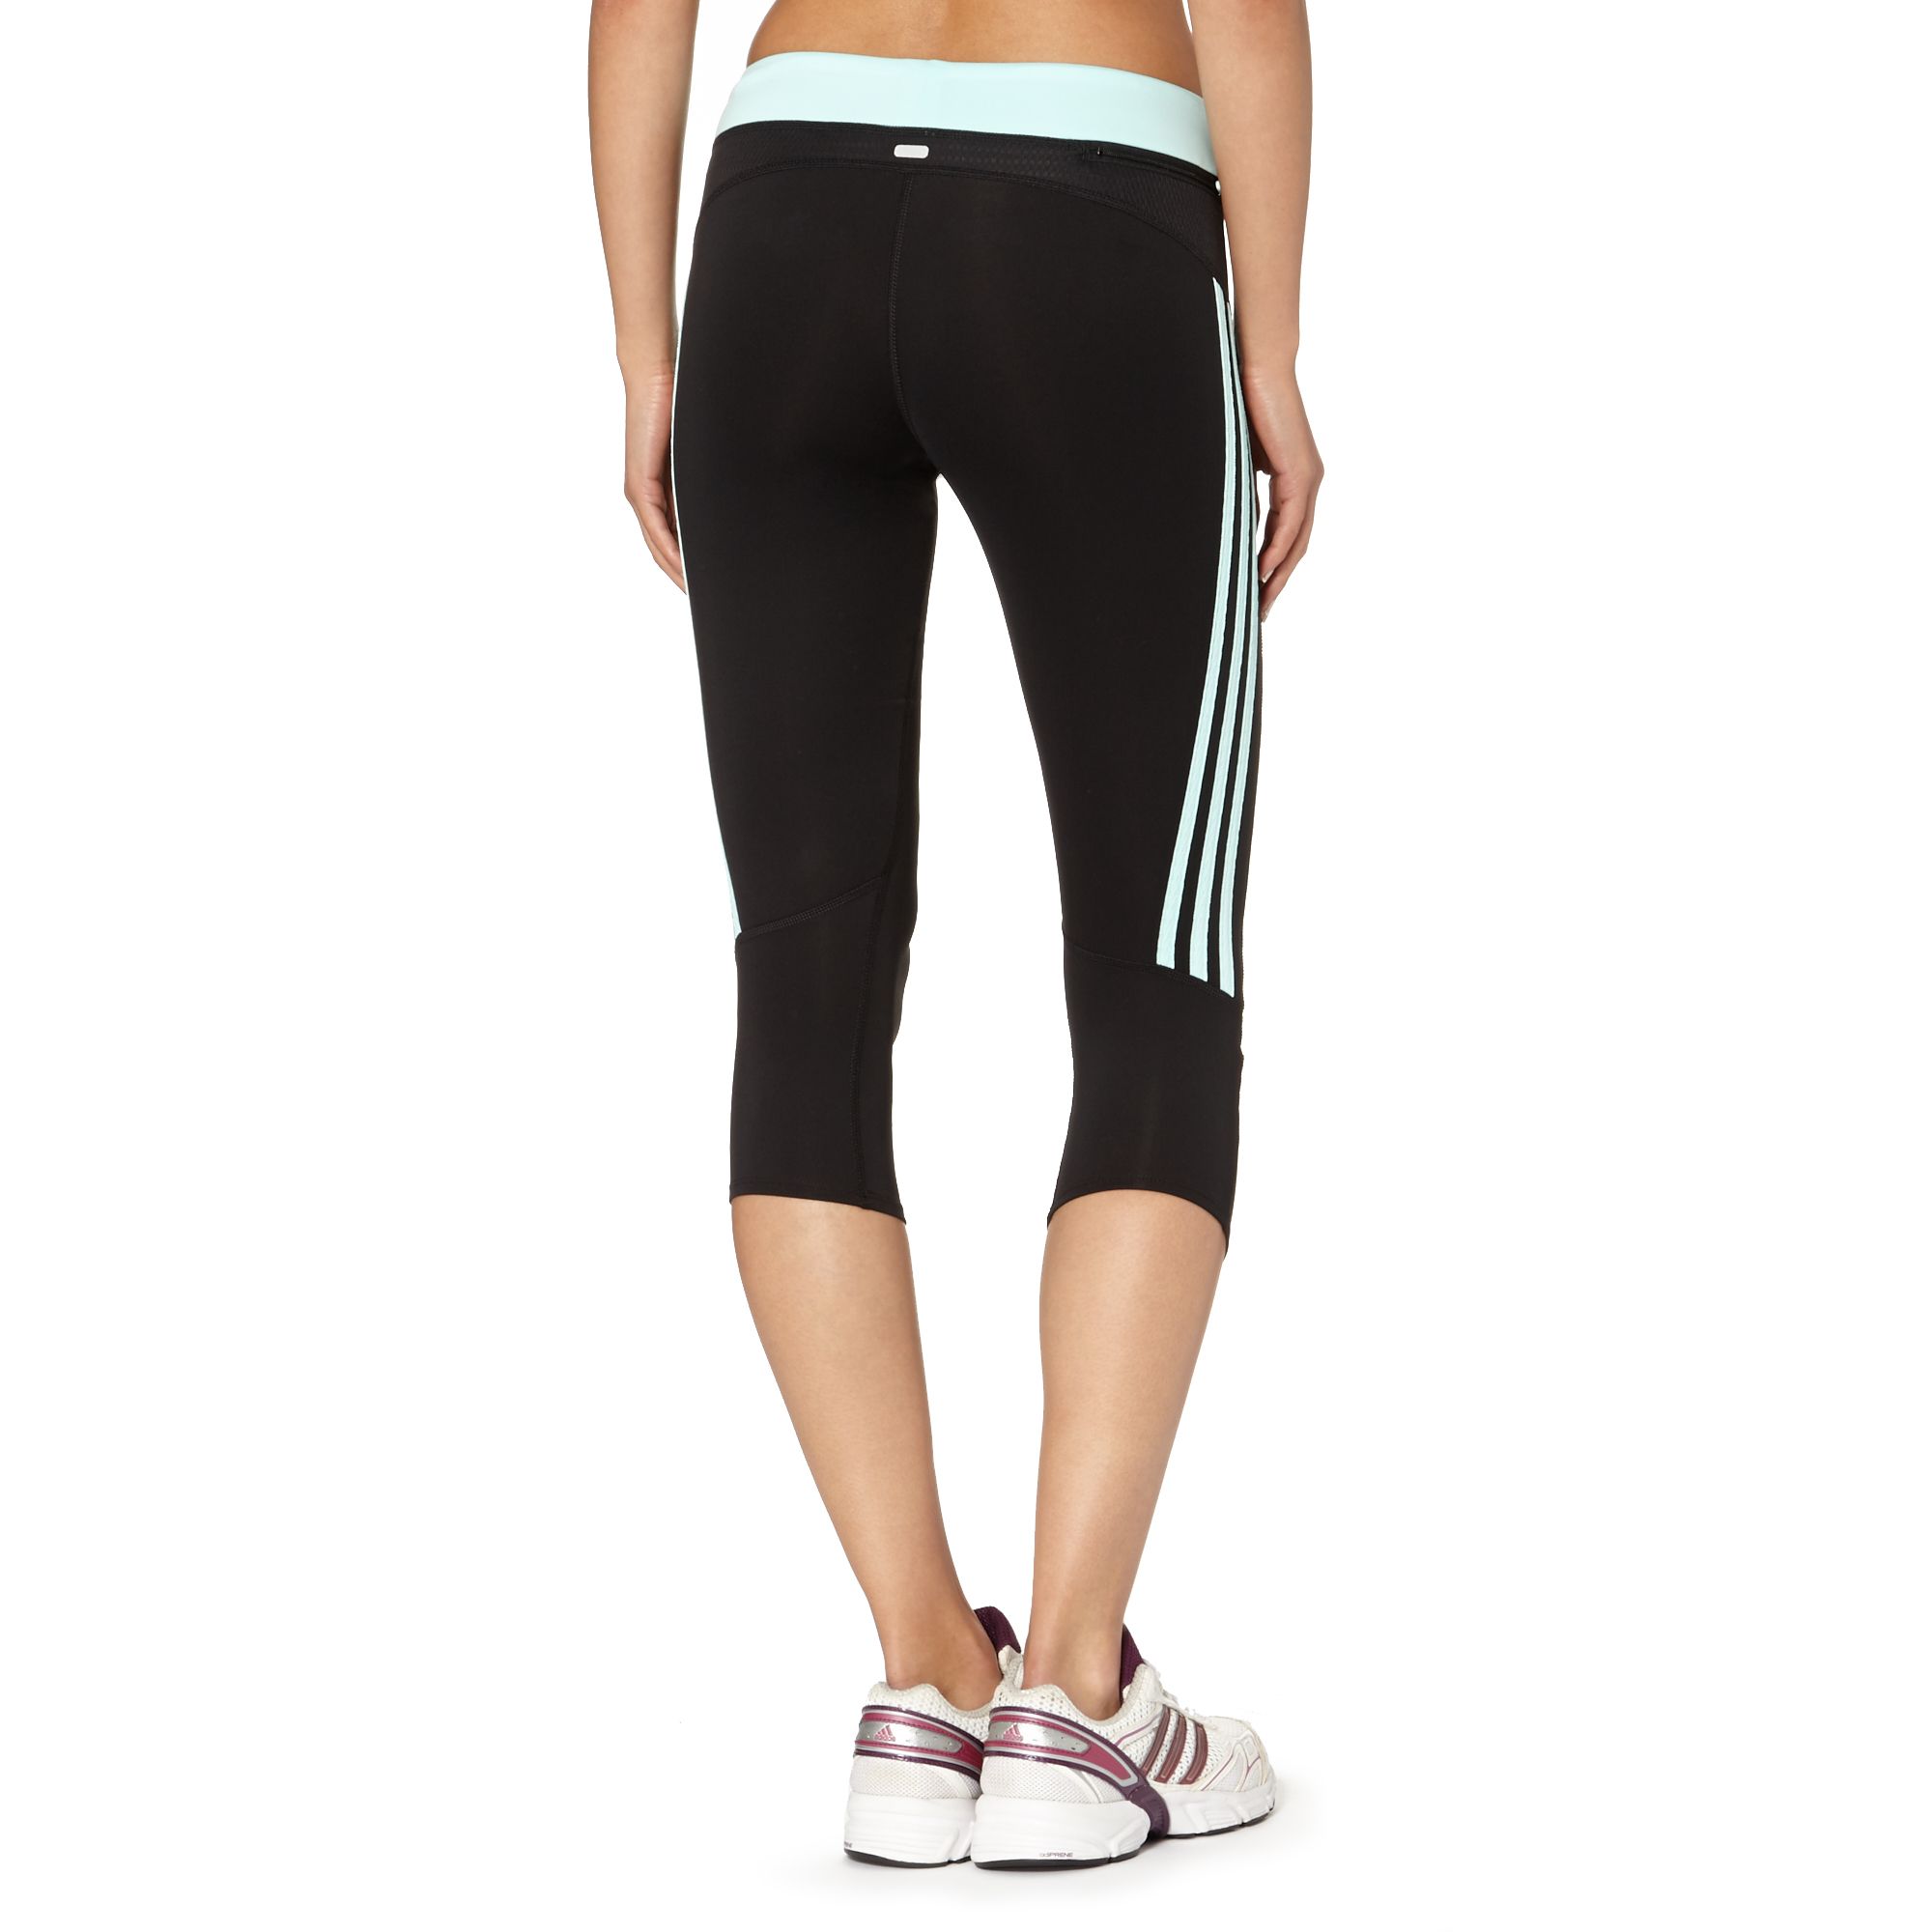 Adidas Womens Black 'Climalite' Capri Pants From Debenhams | eBay